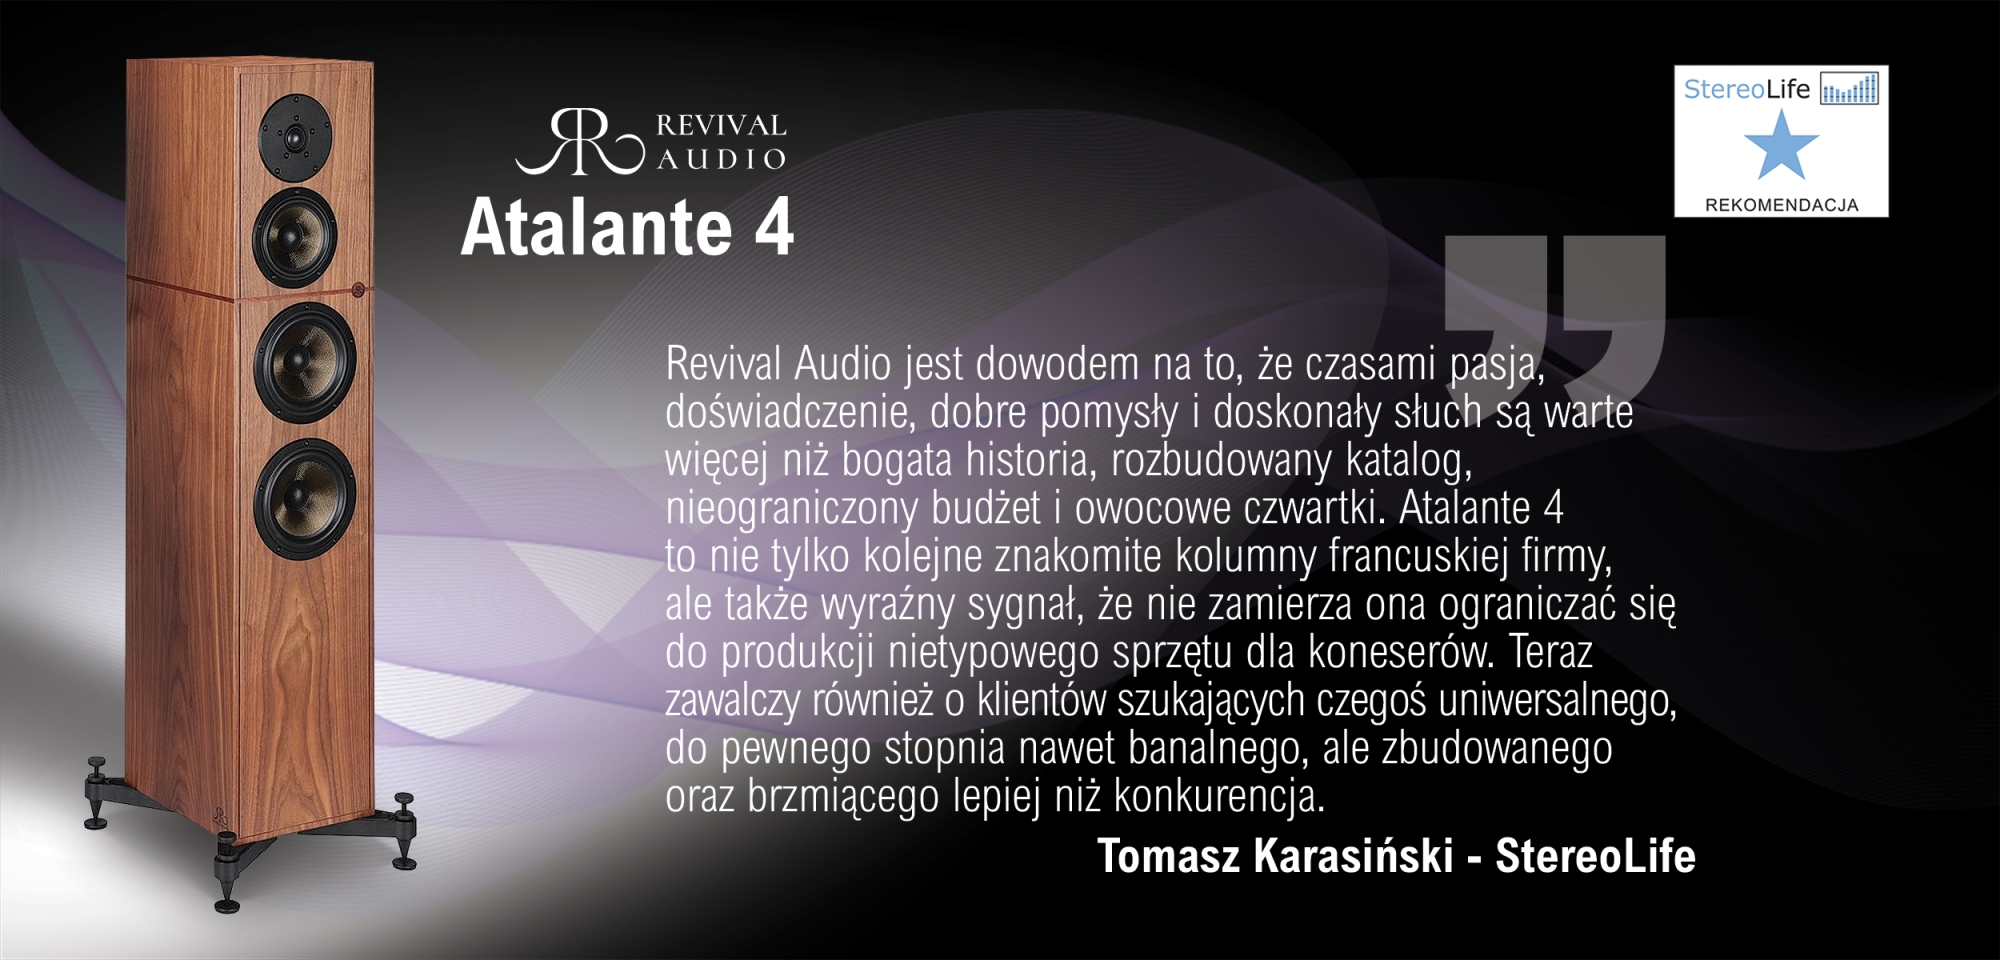 Recenzja i nagroda Revival Audio Atalante 4 - StereoLife